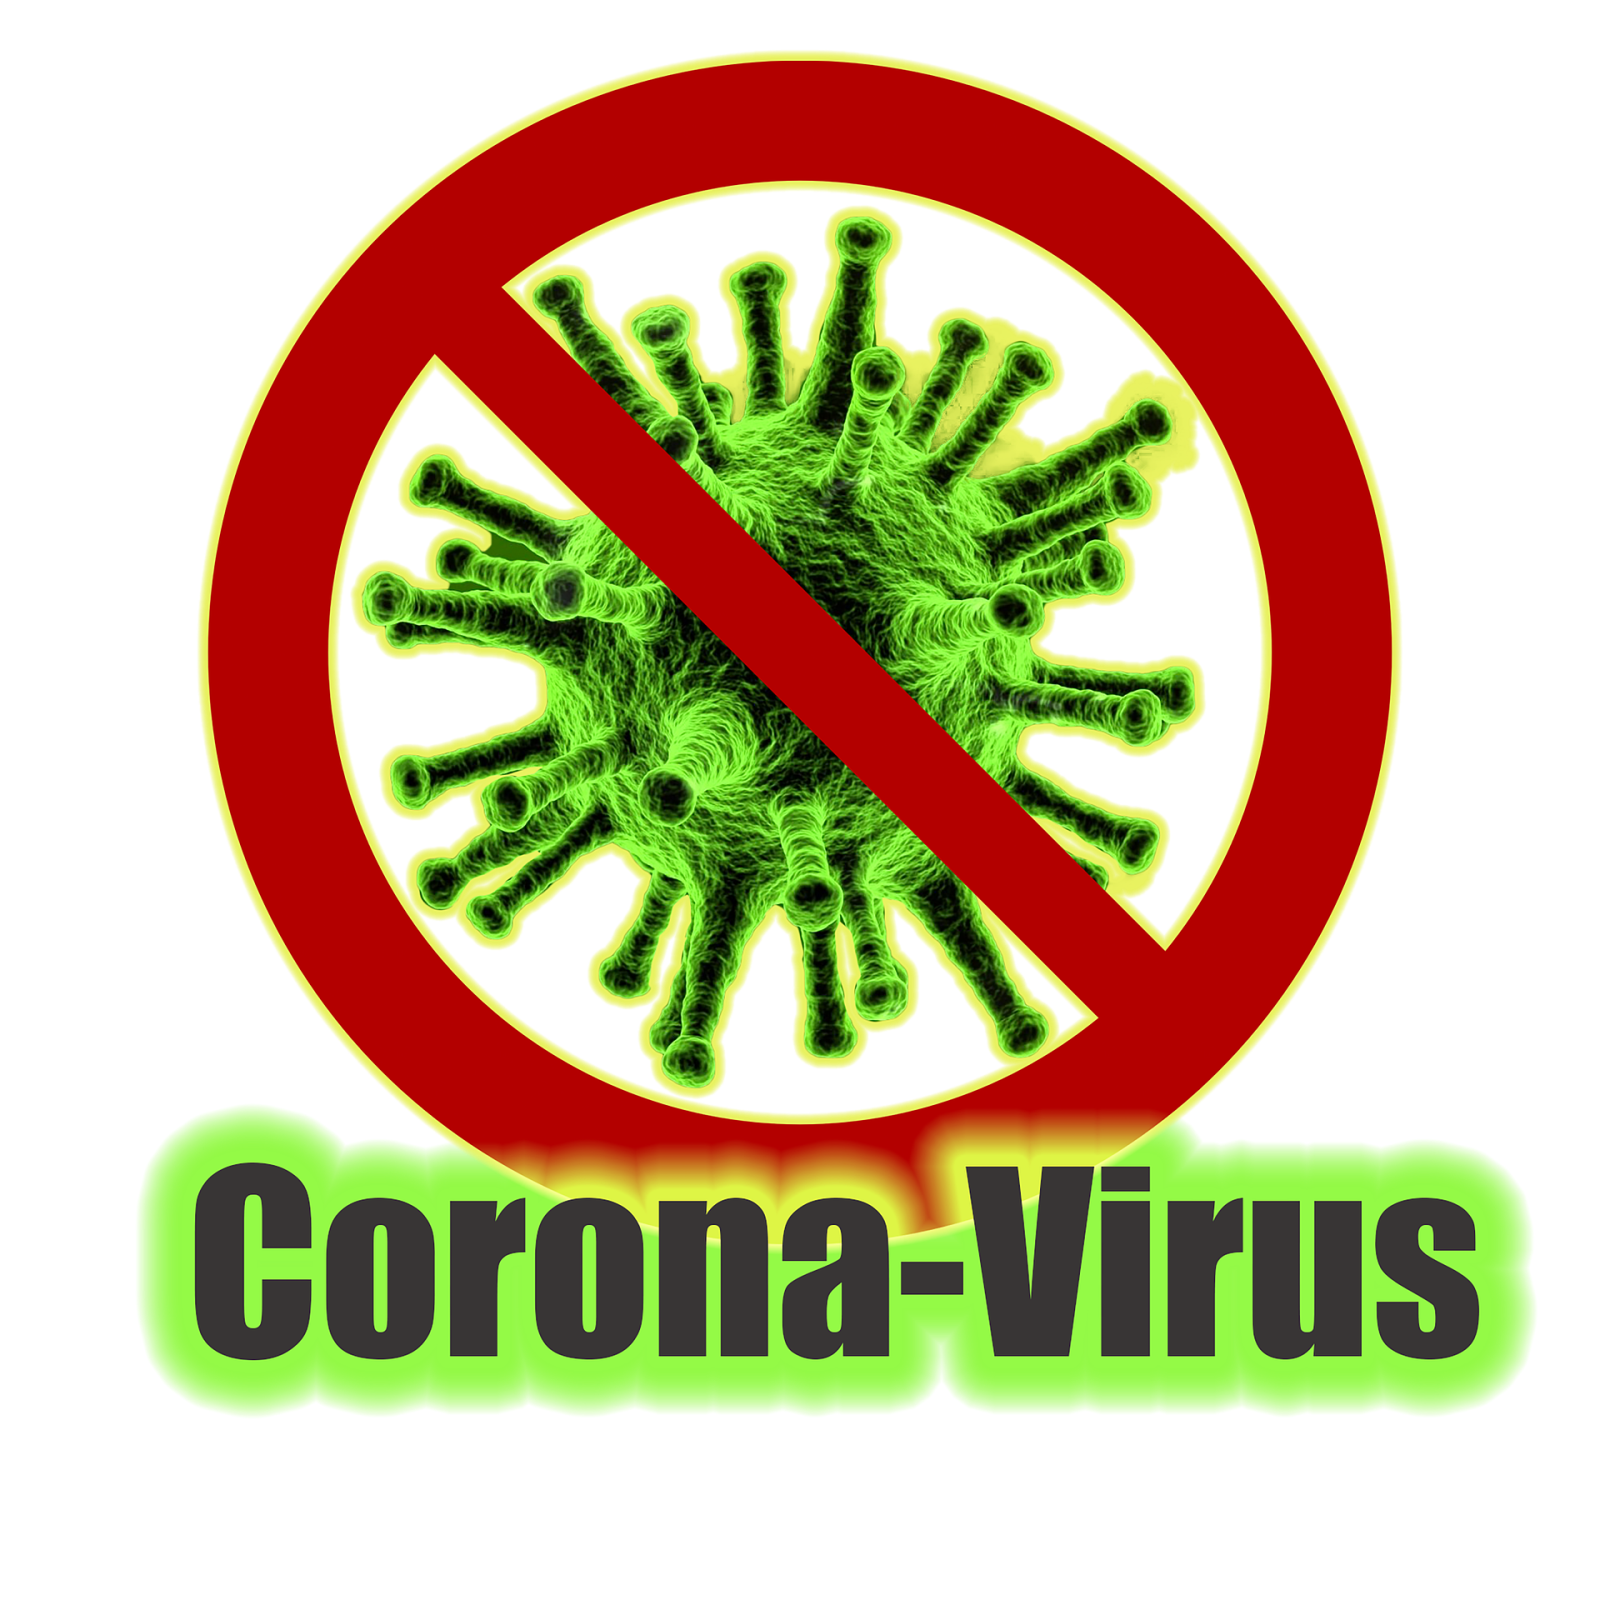 Скоро коронавирус. Вирус. Коронавирус перечеркнутый. Нет коронавирусу. Значок против вирусов.